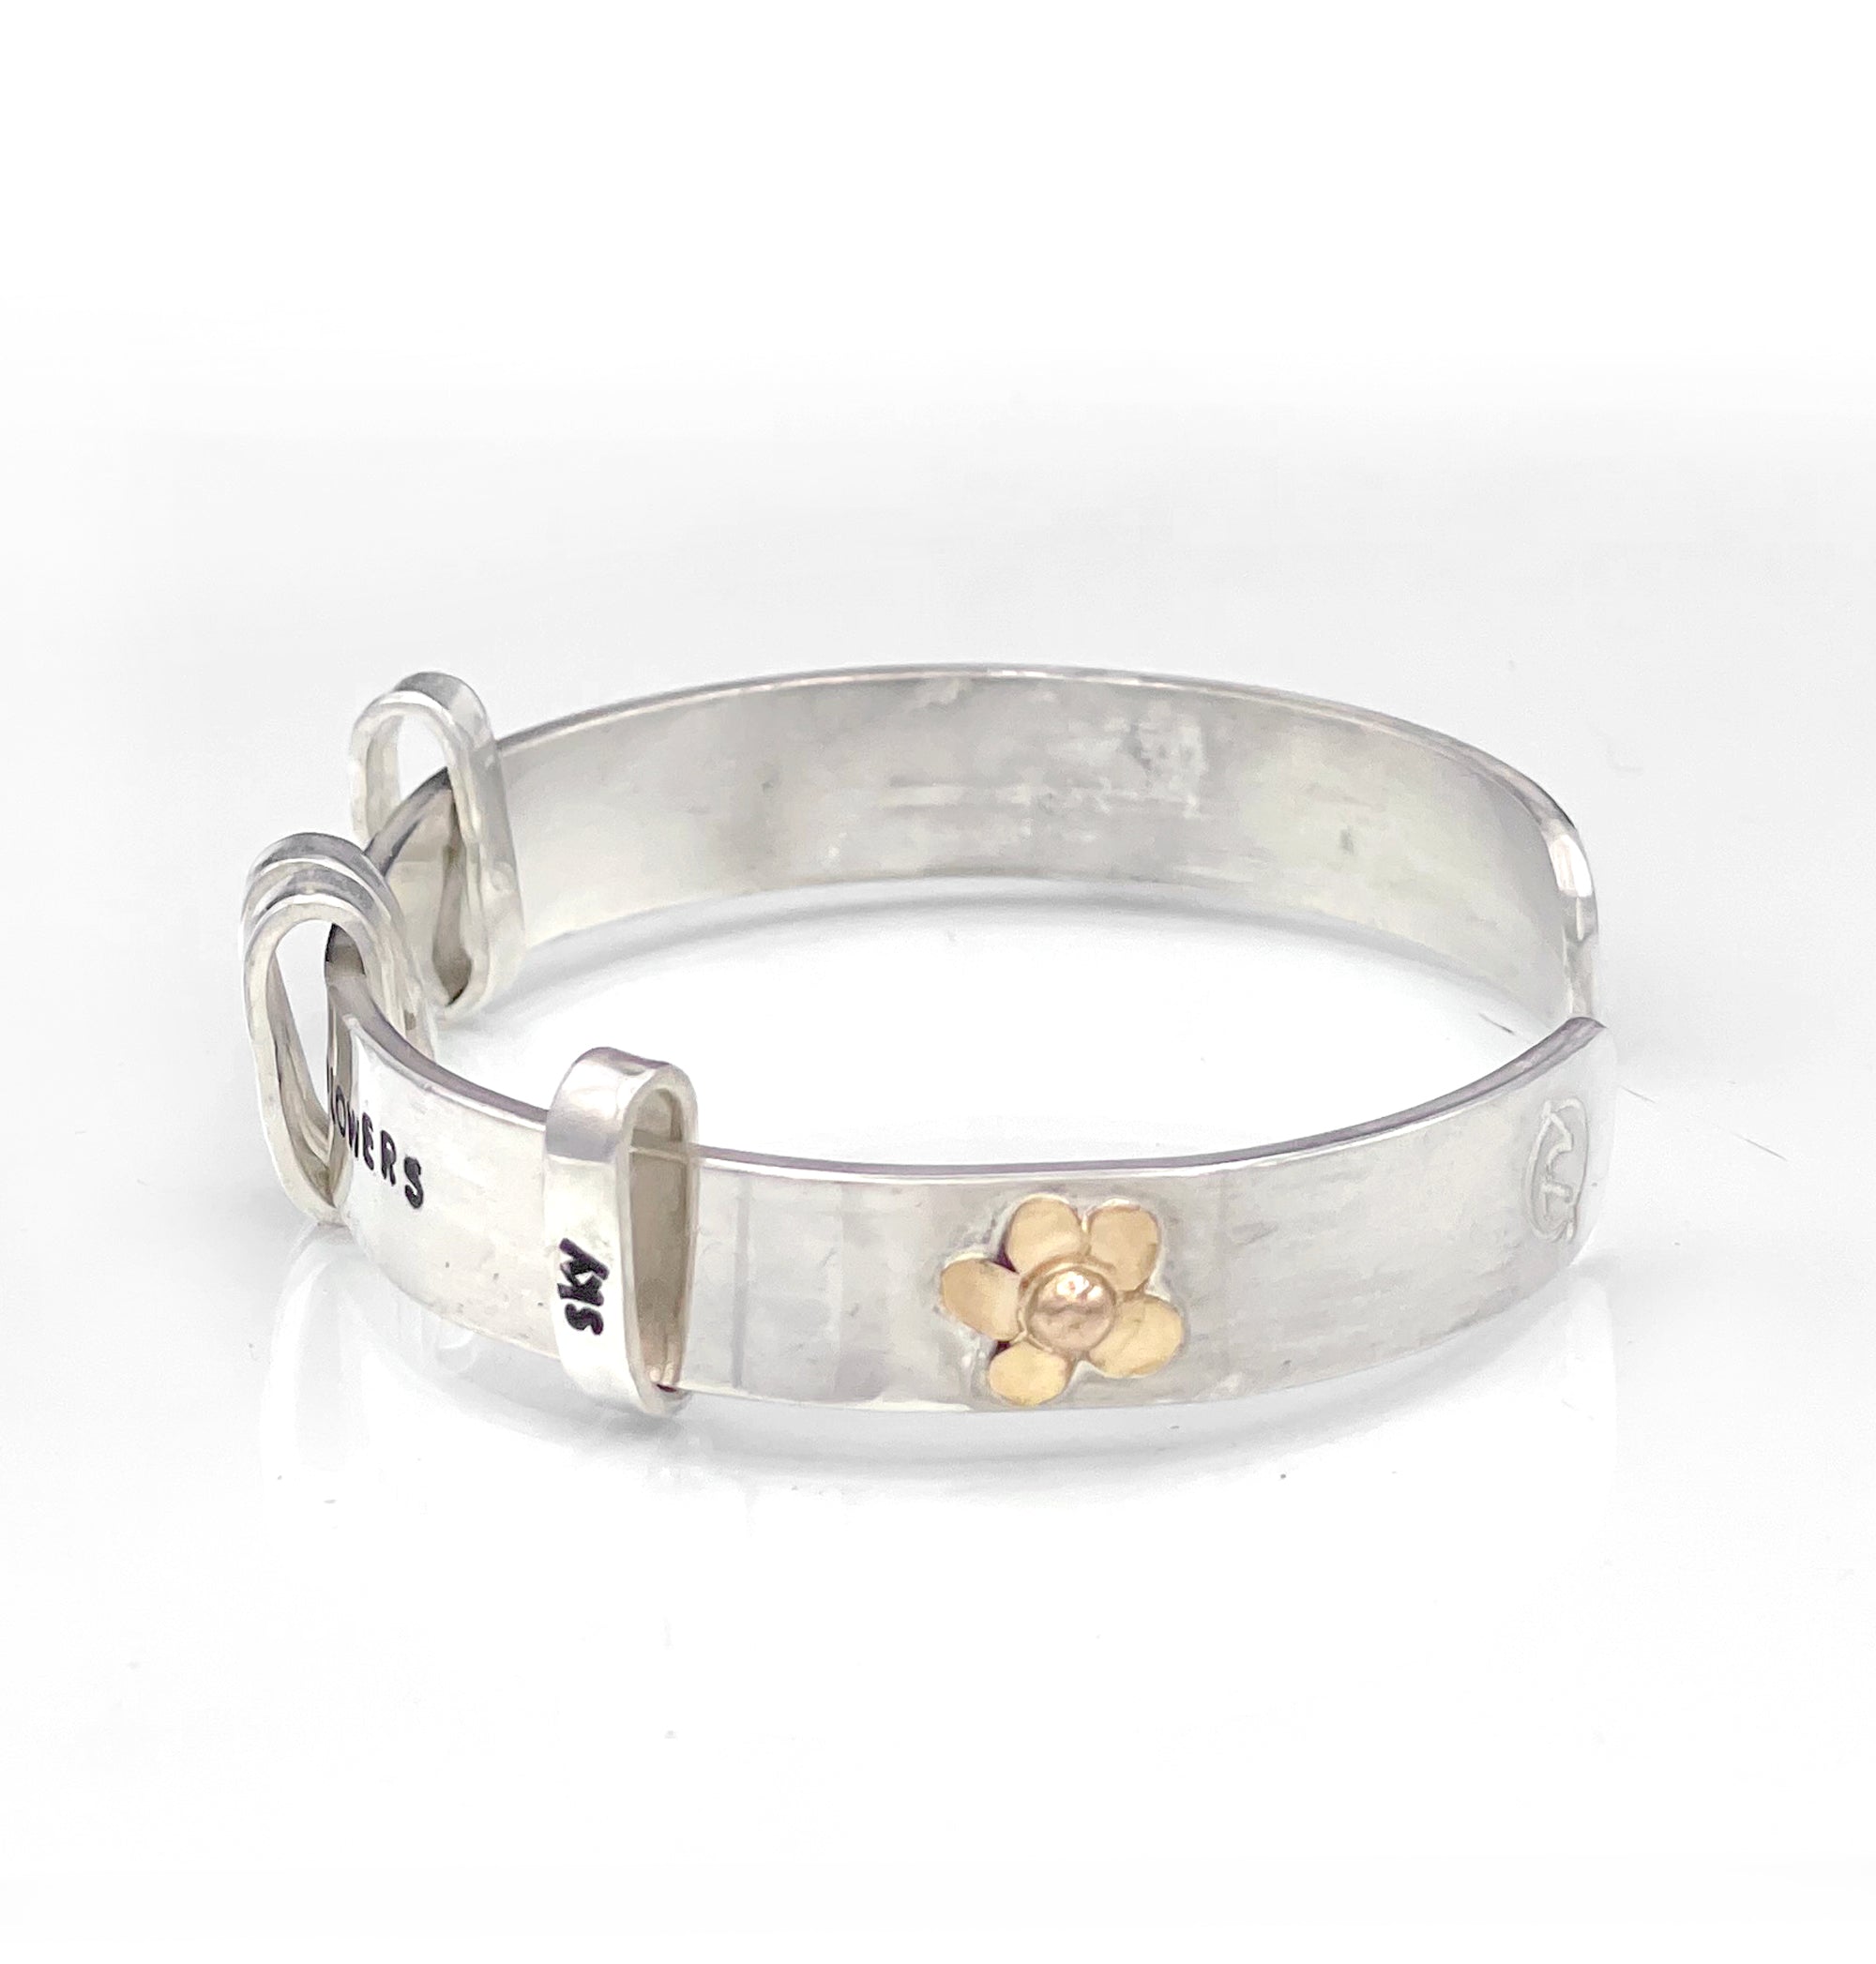 A Mothers Garden Personalized Cuff Bracelet